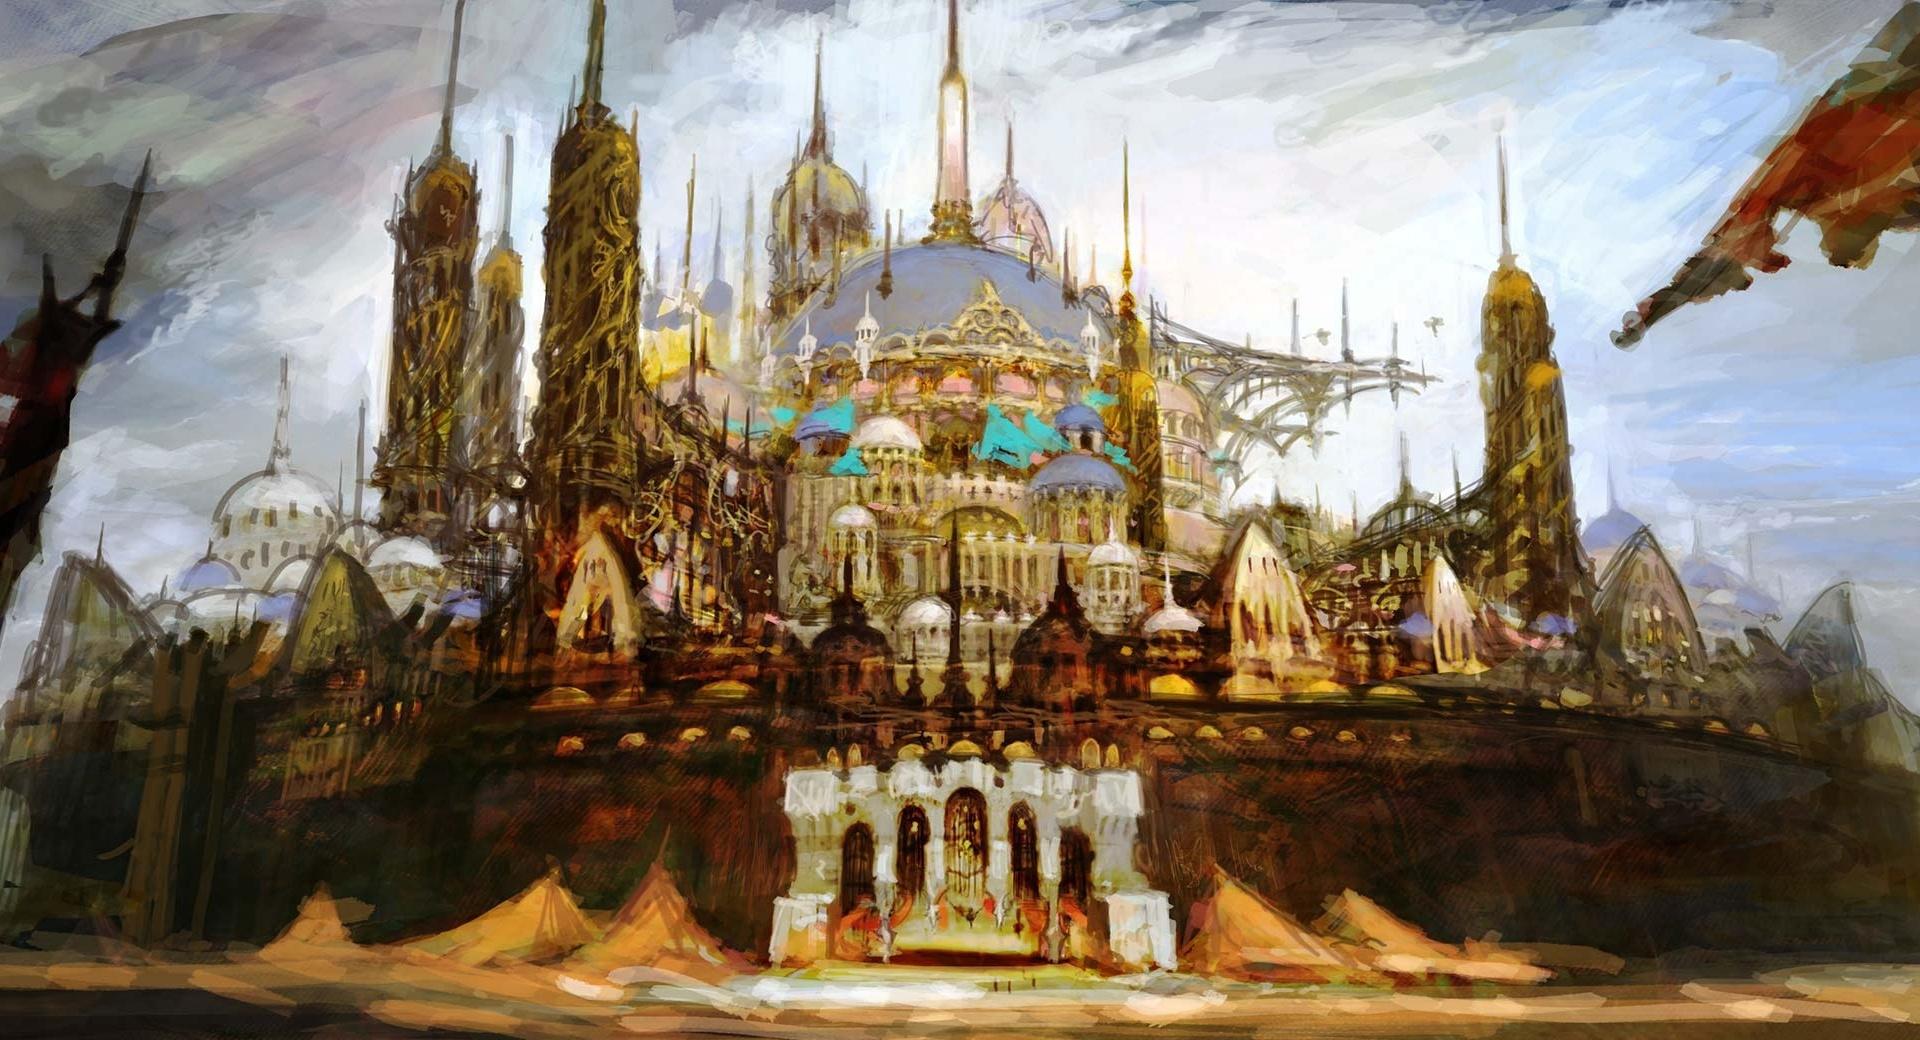 Final Fantasy XIV Online Artwork wallpapers HD quality